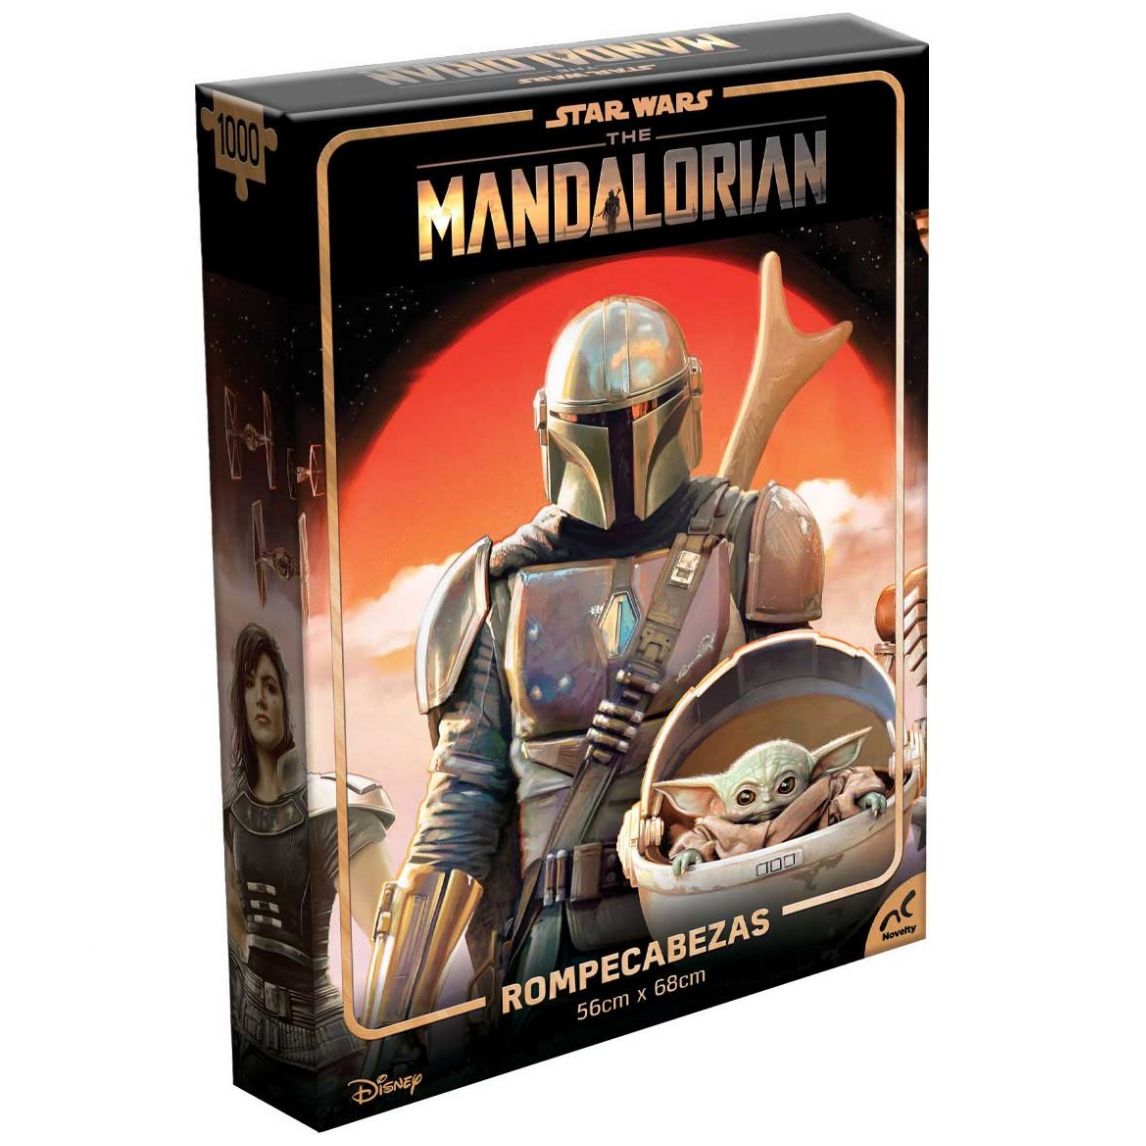 Rompecabezas Coleccionable Star Wars The Mandalorian